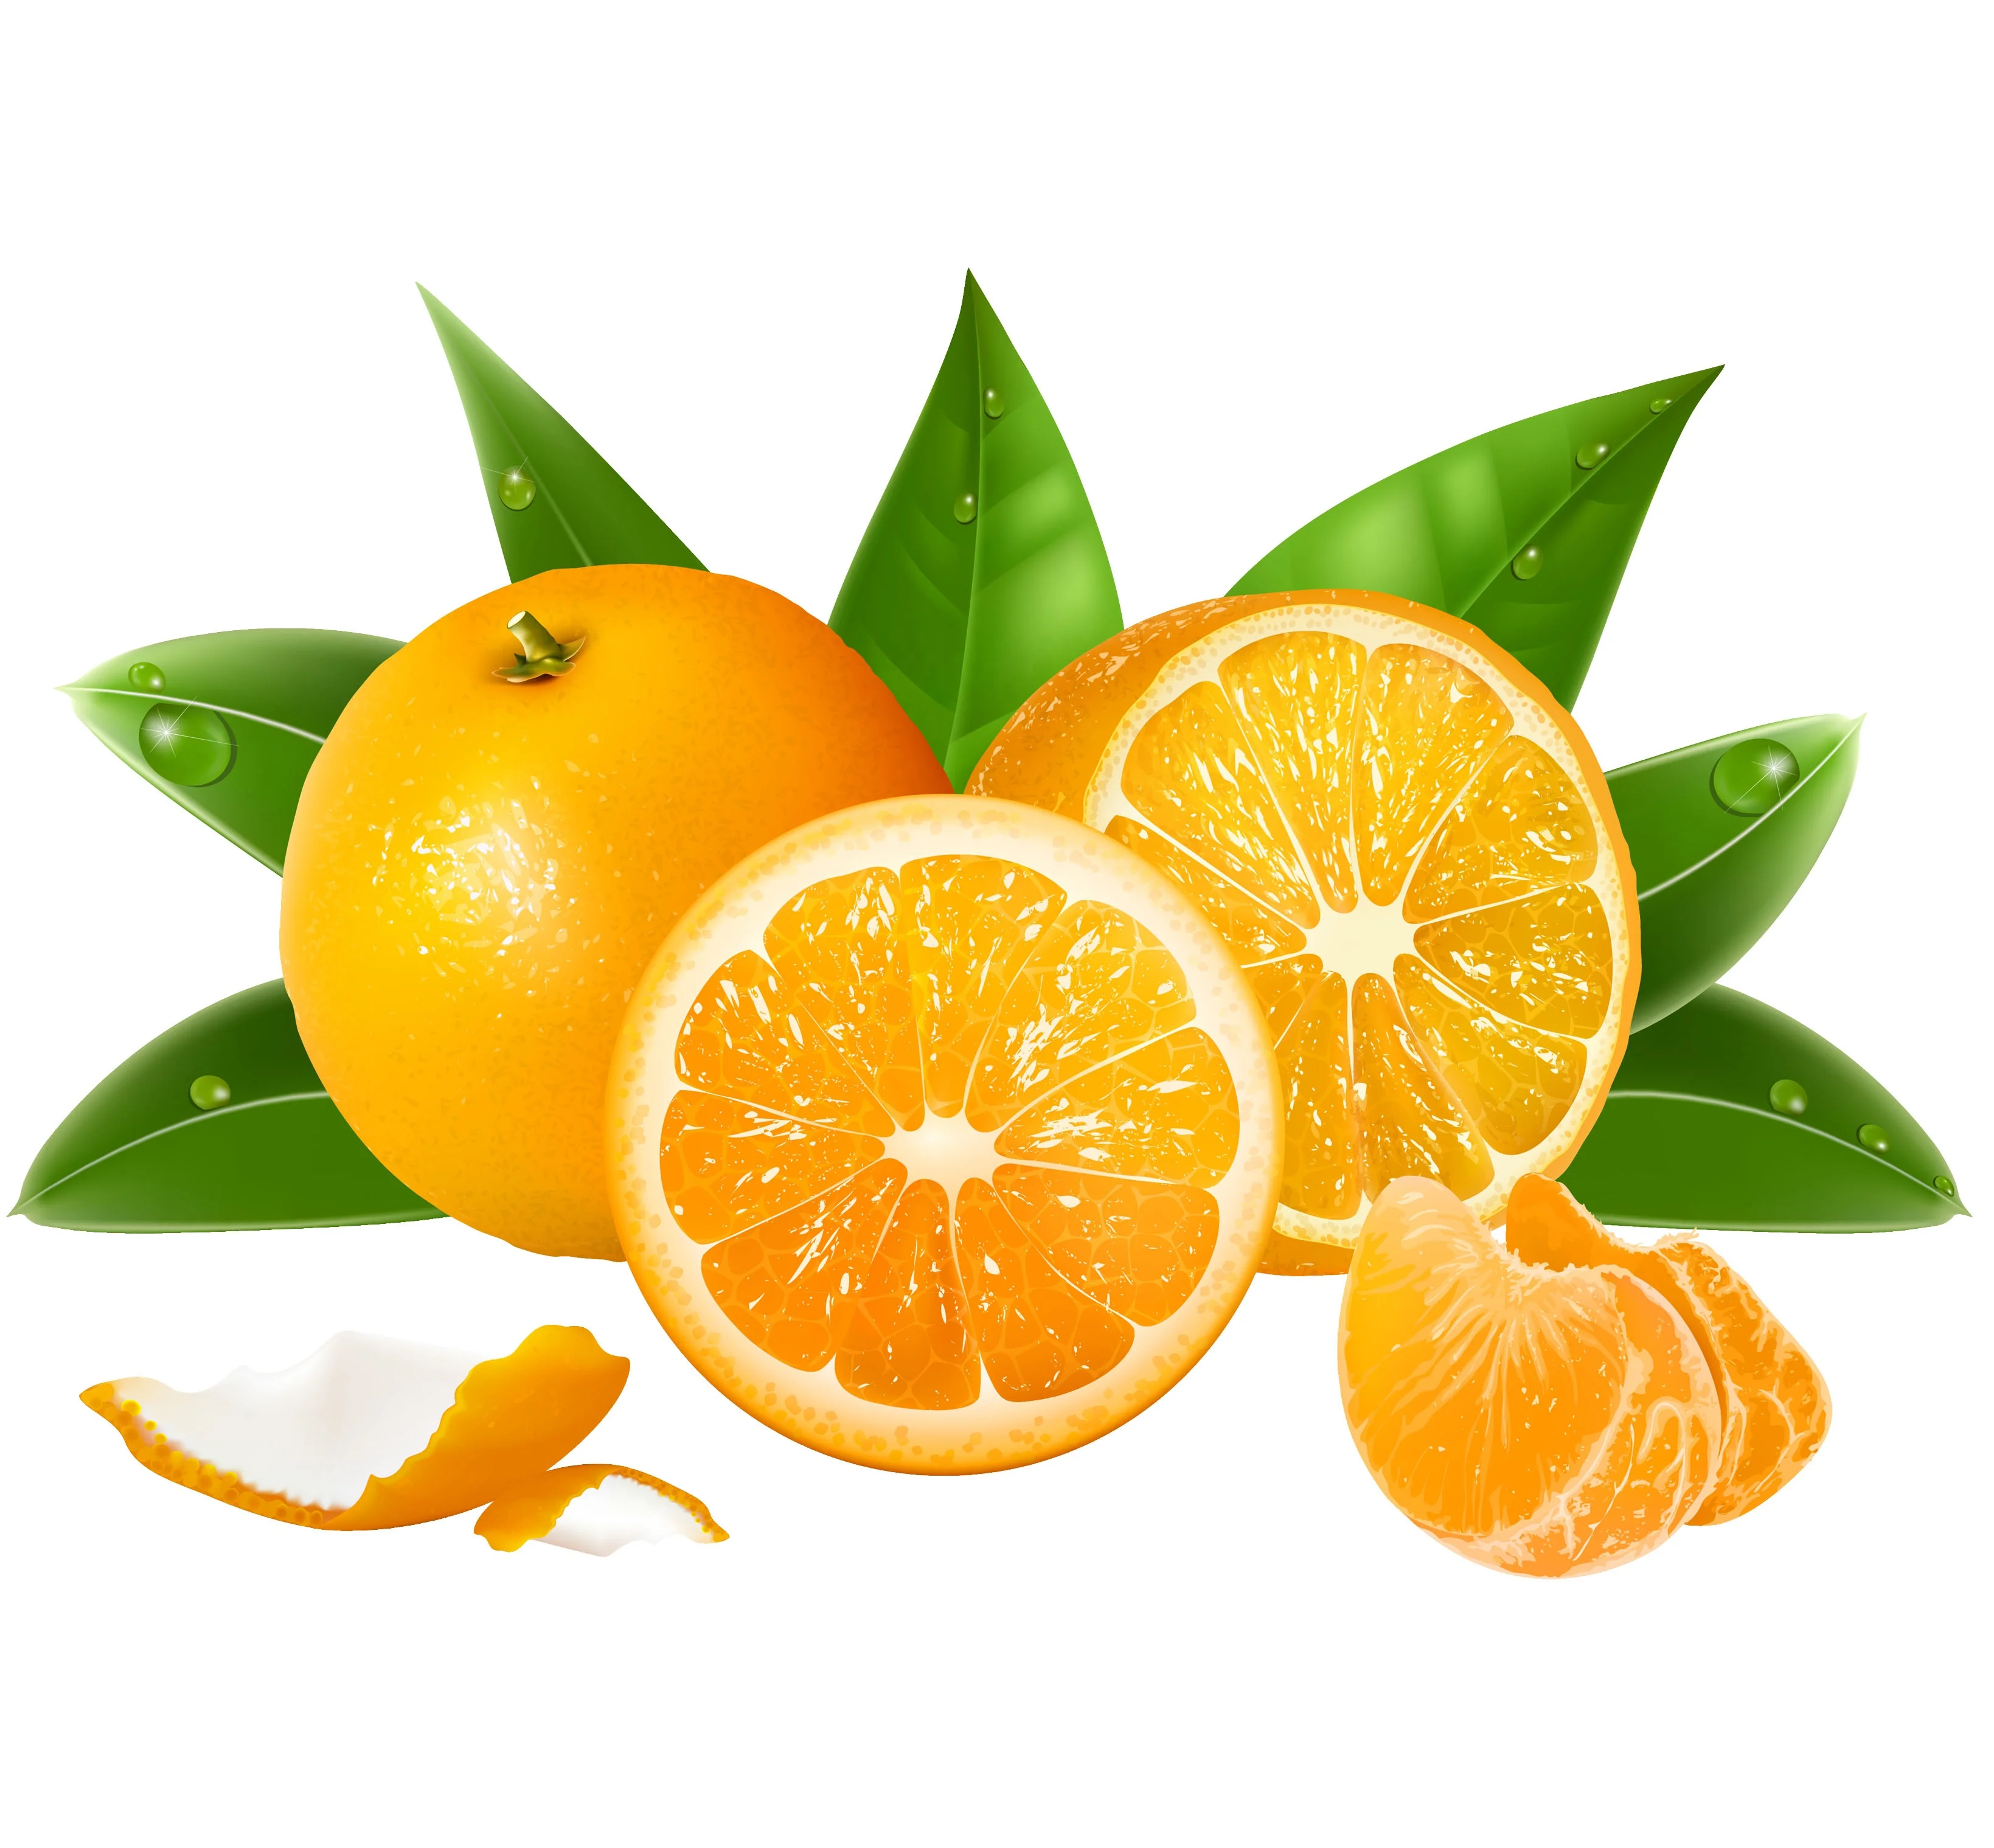 new season Valencia citrus orange from Egypt with many sizes (50031096971)